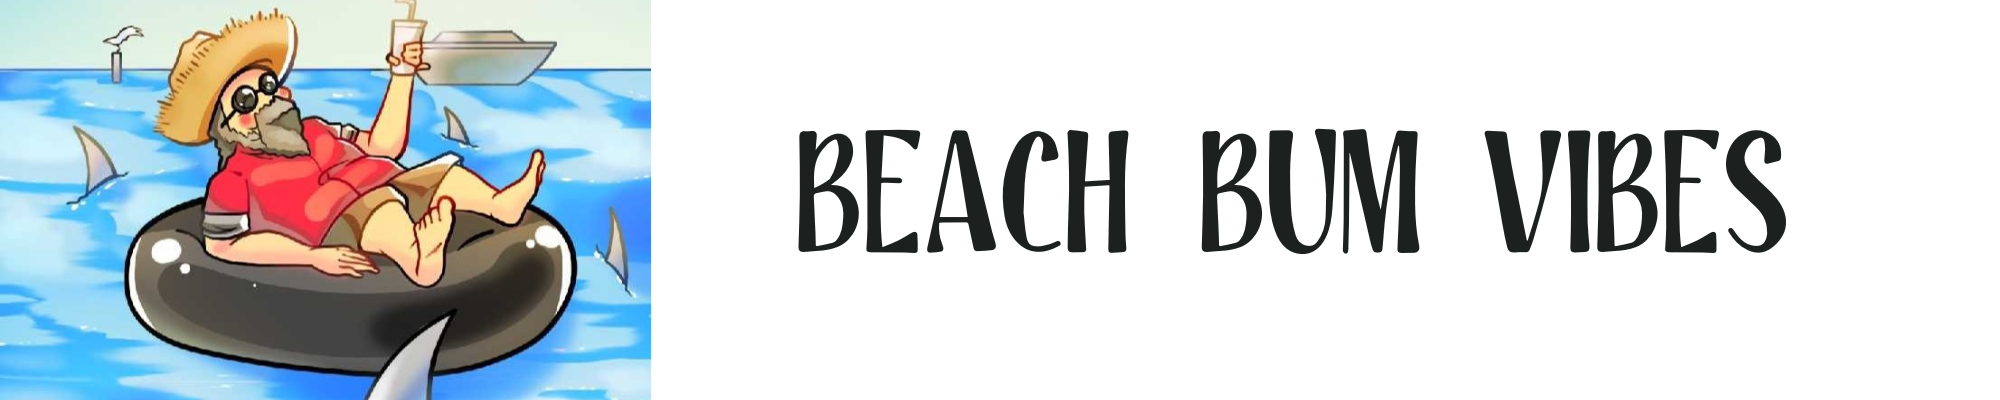 BeachBumVibesLLC